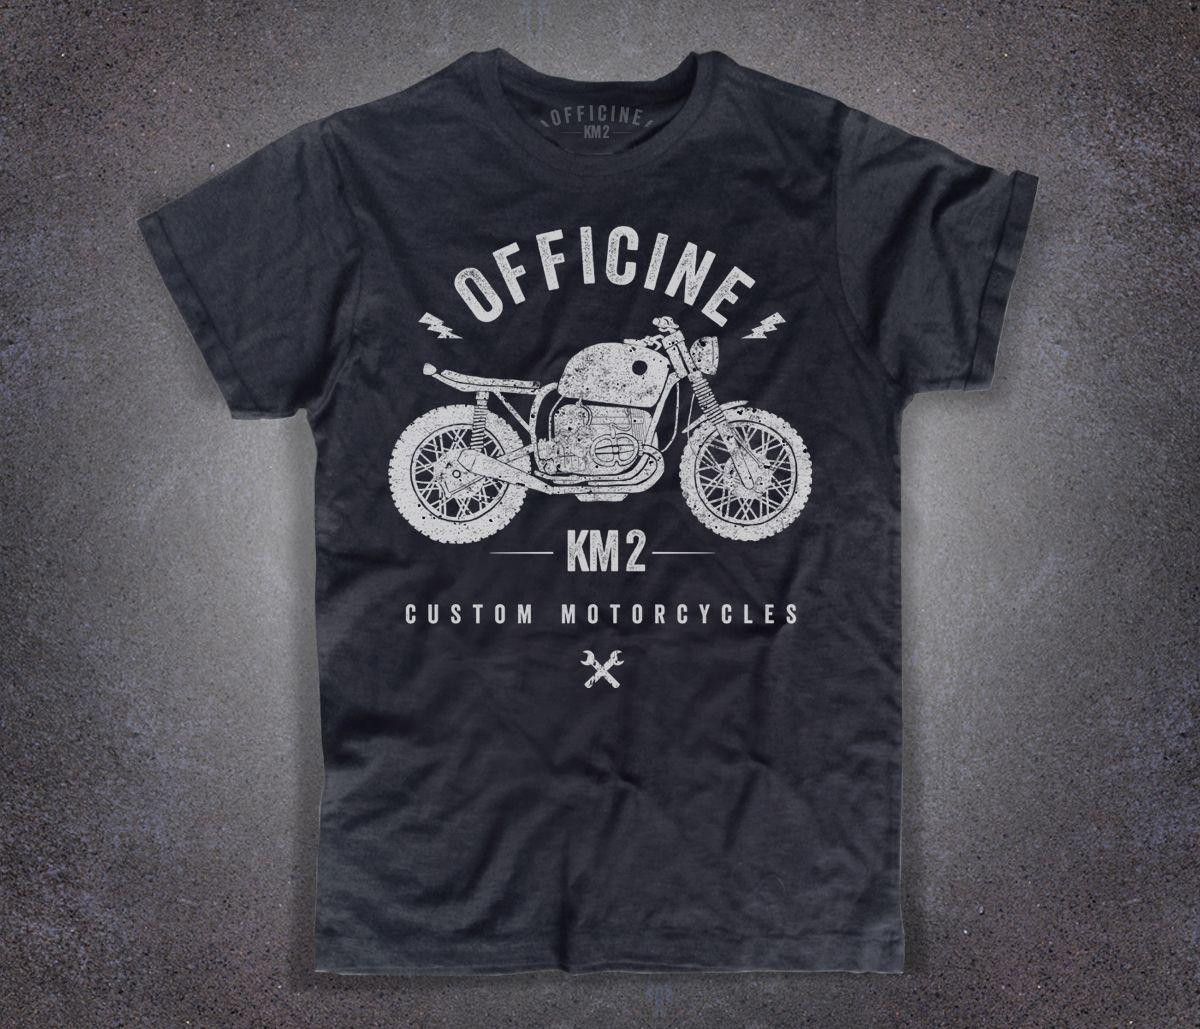 Km2 Logo - Motorcycle T-shirt Uomo - Officine Km 2 - Classic frontal logo - AmazInk